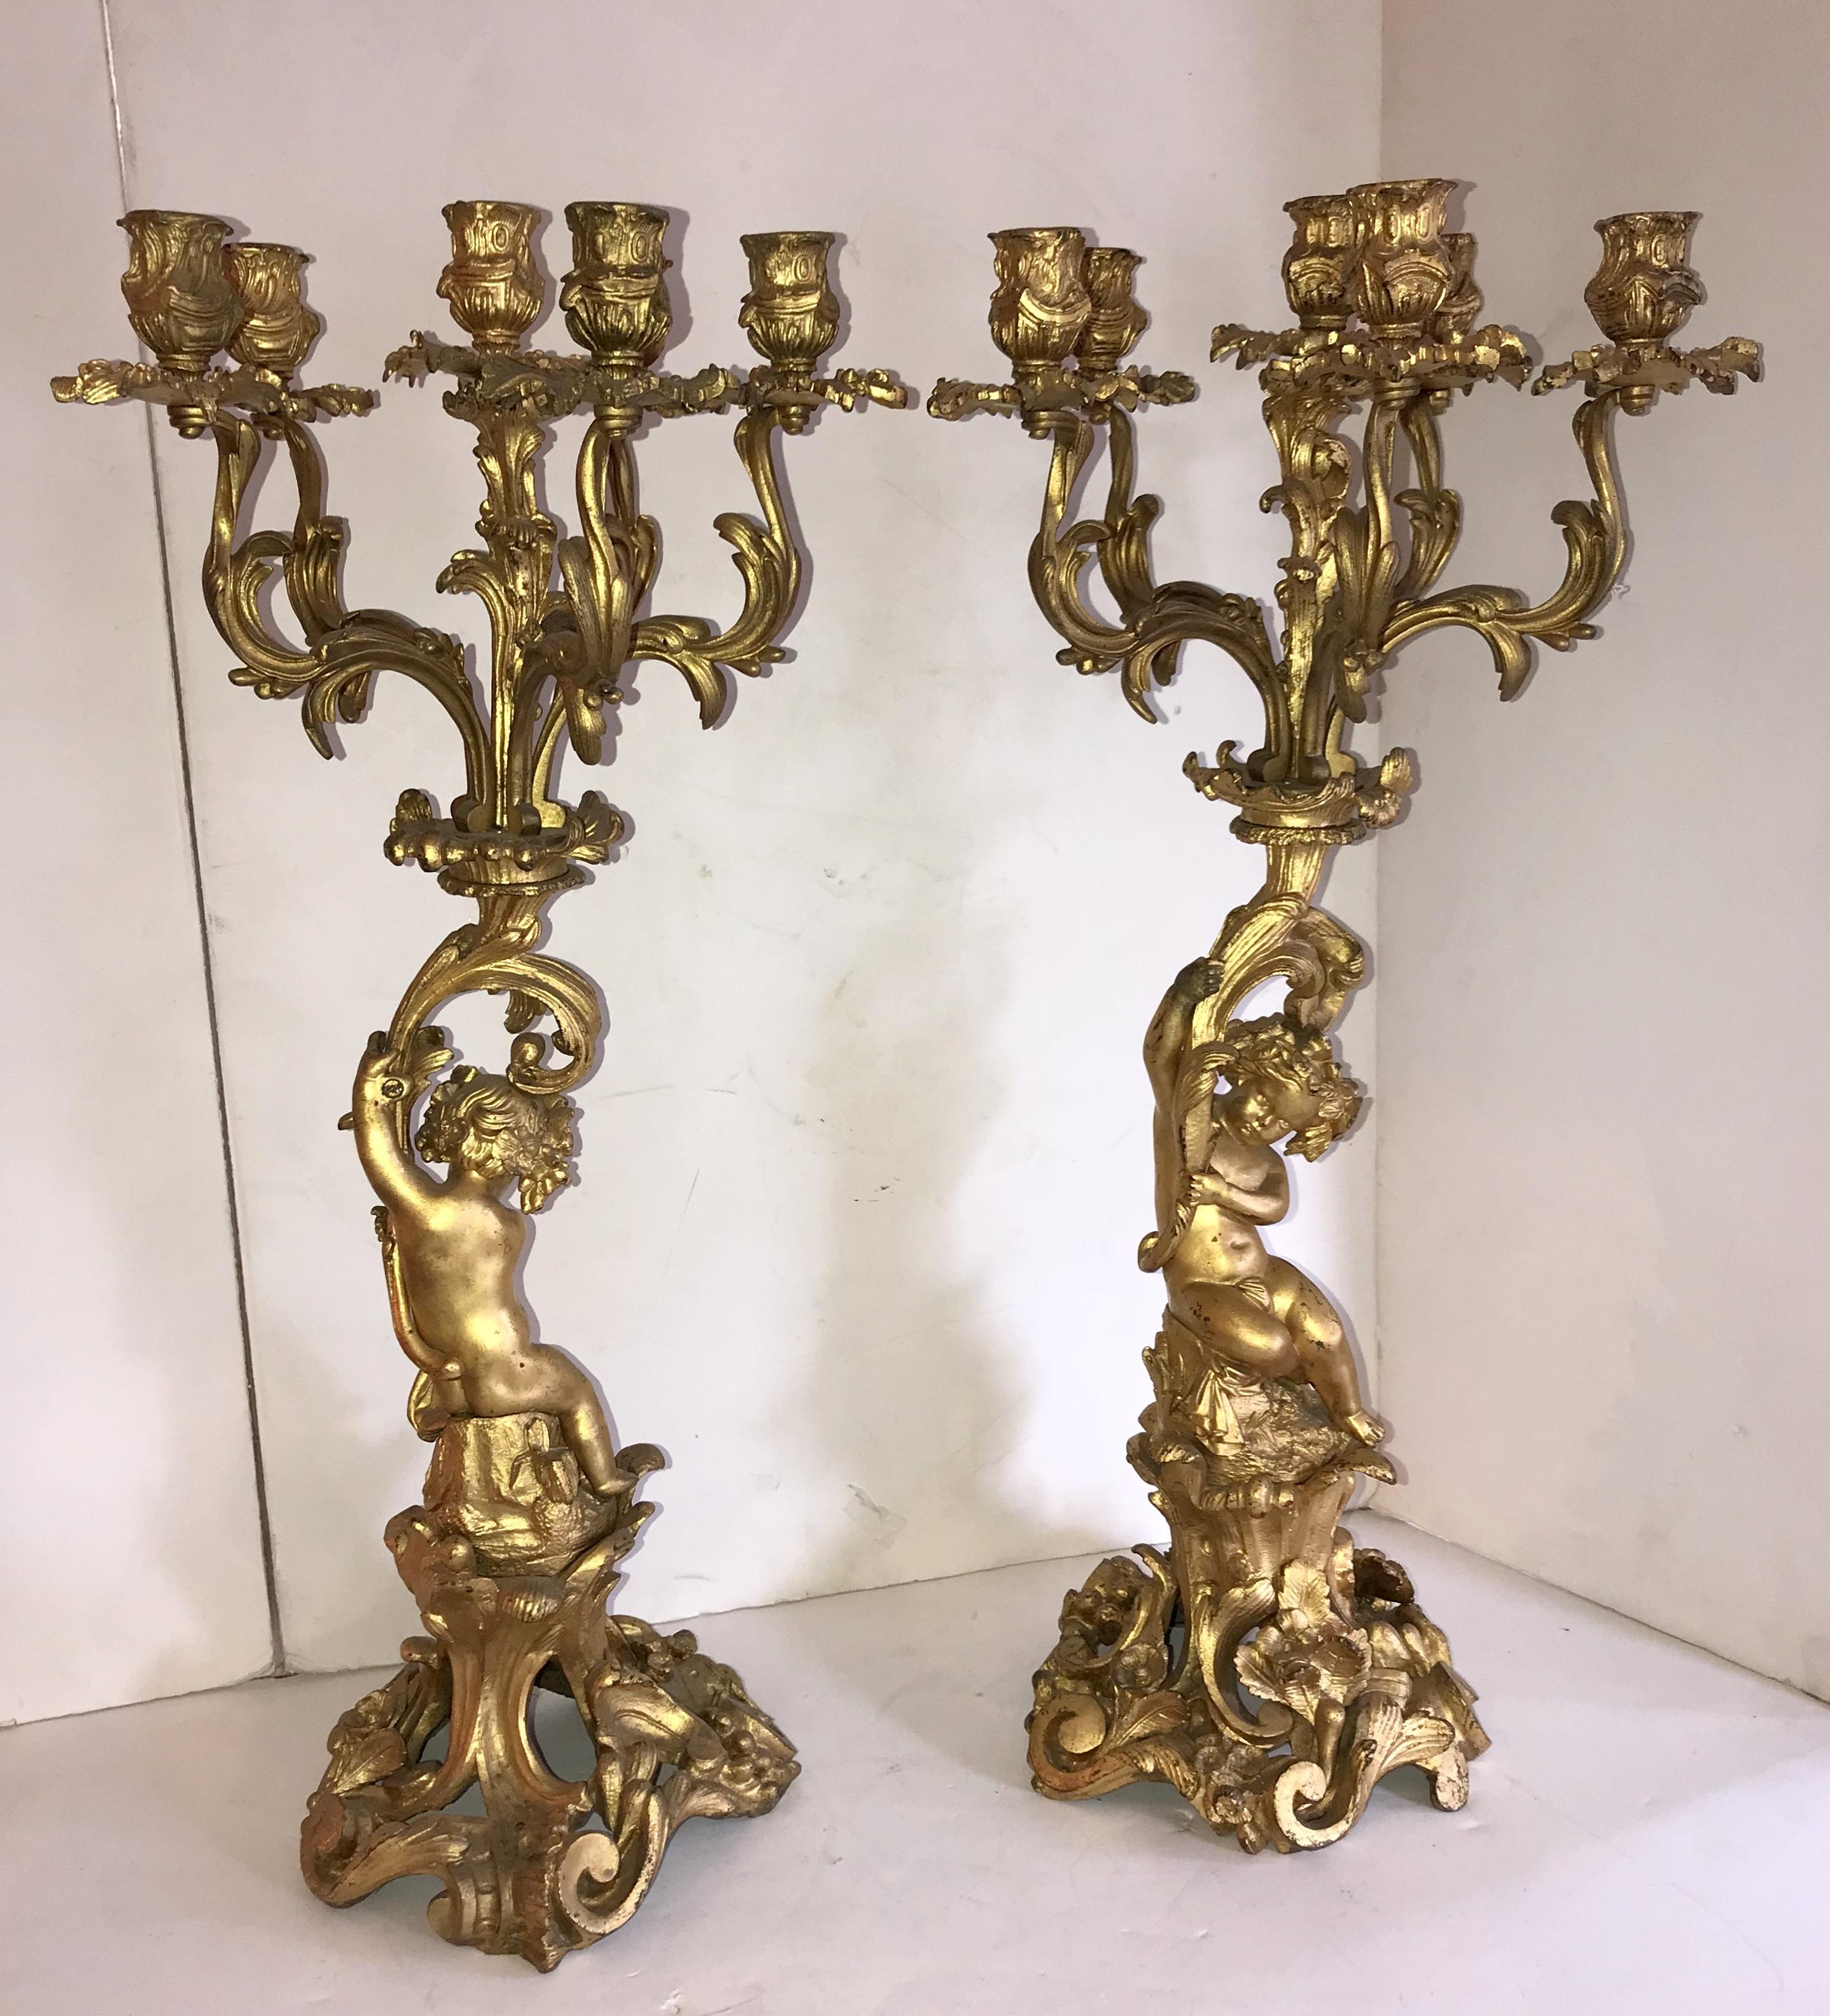 Wonderful Pair of French Dore Bronze Cherub Putti Figural Louis XVI Candelabras For Sale 1